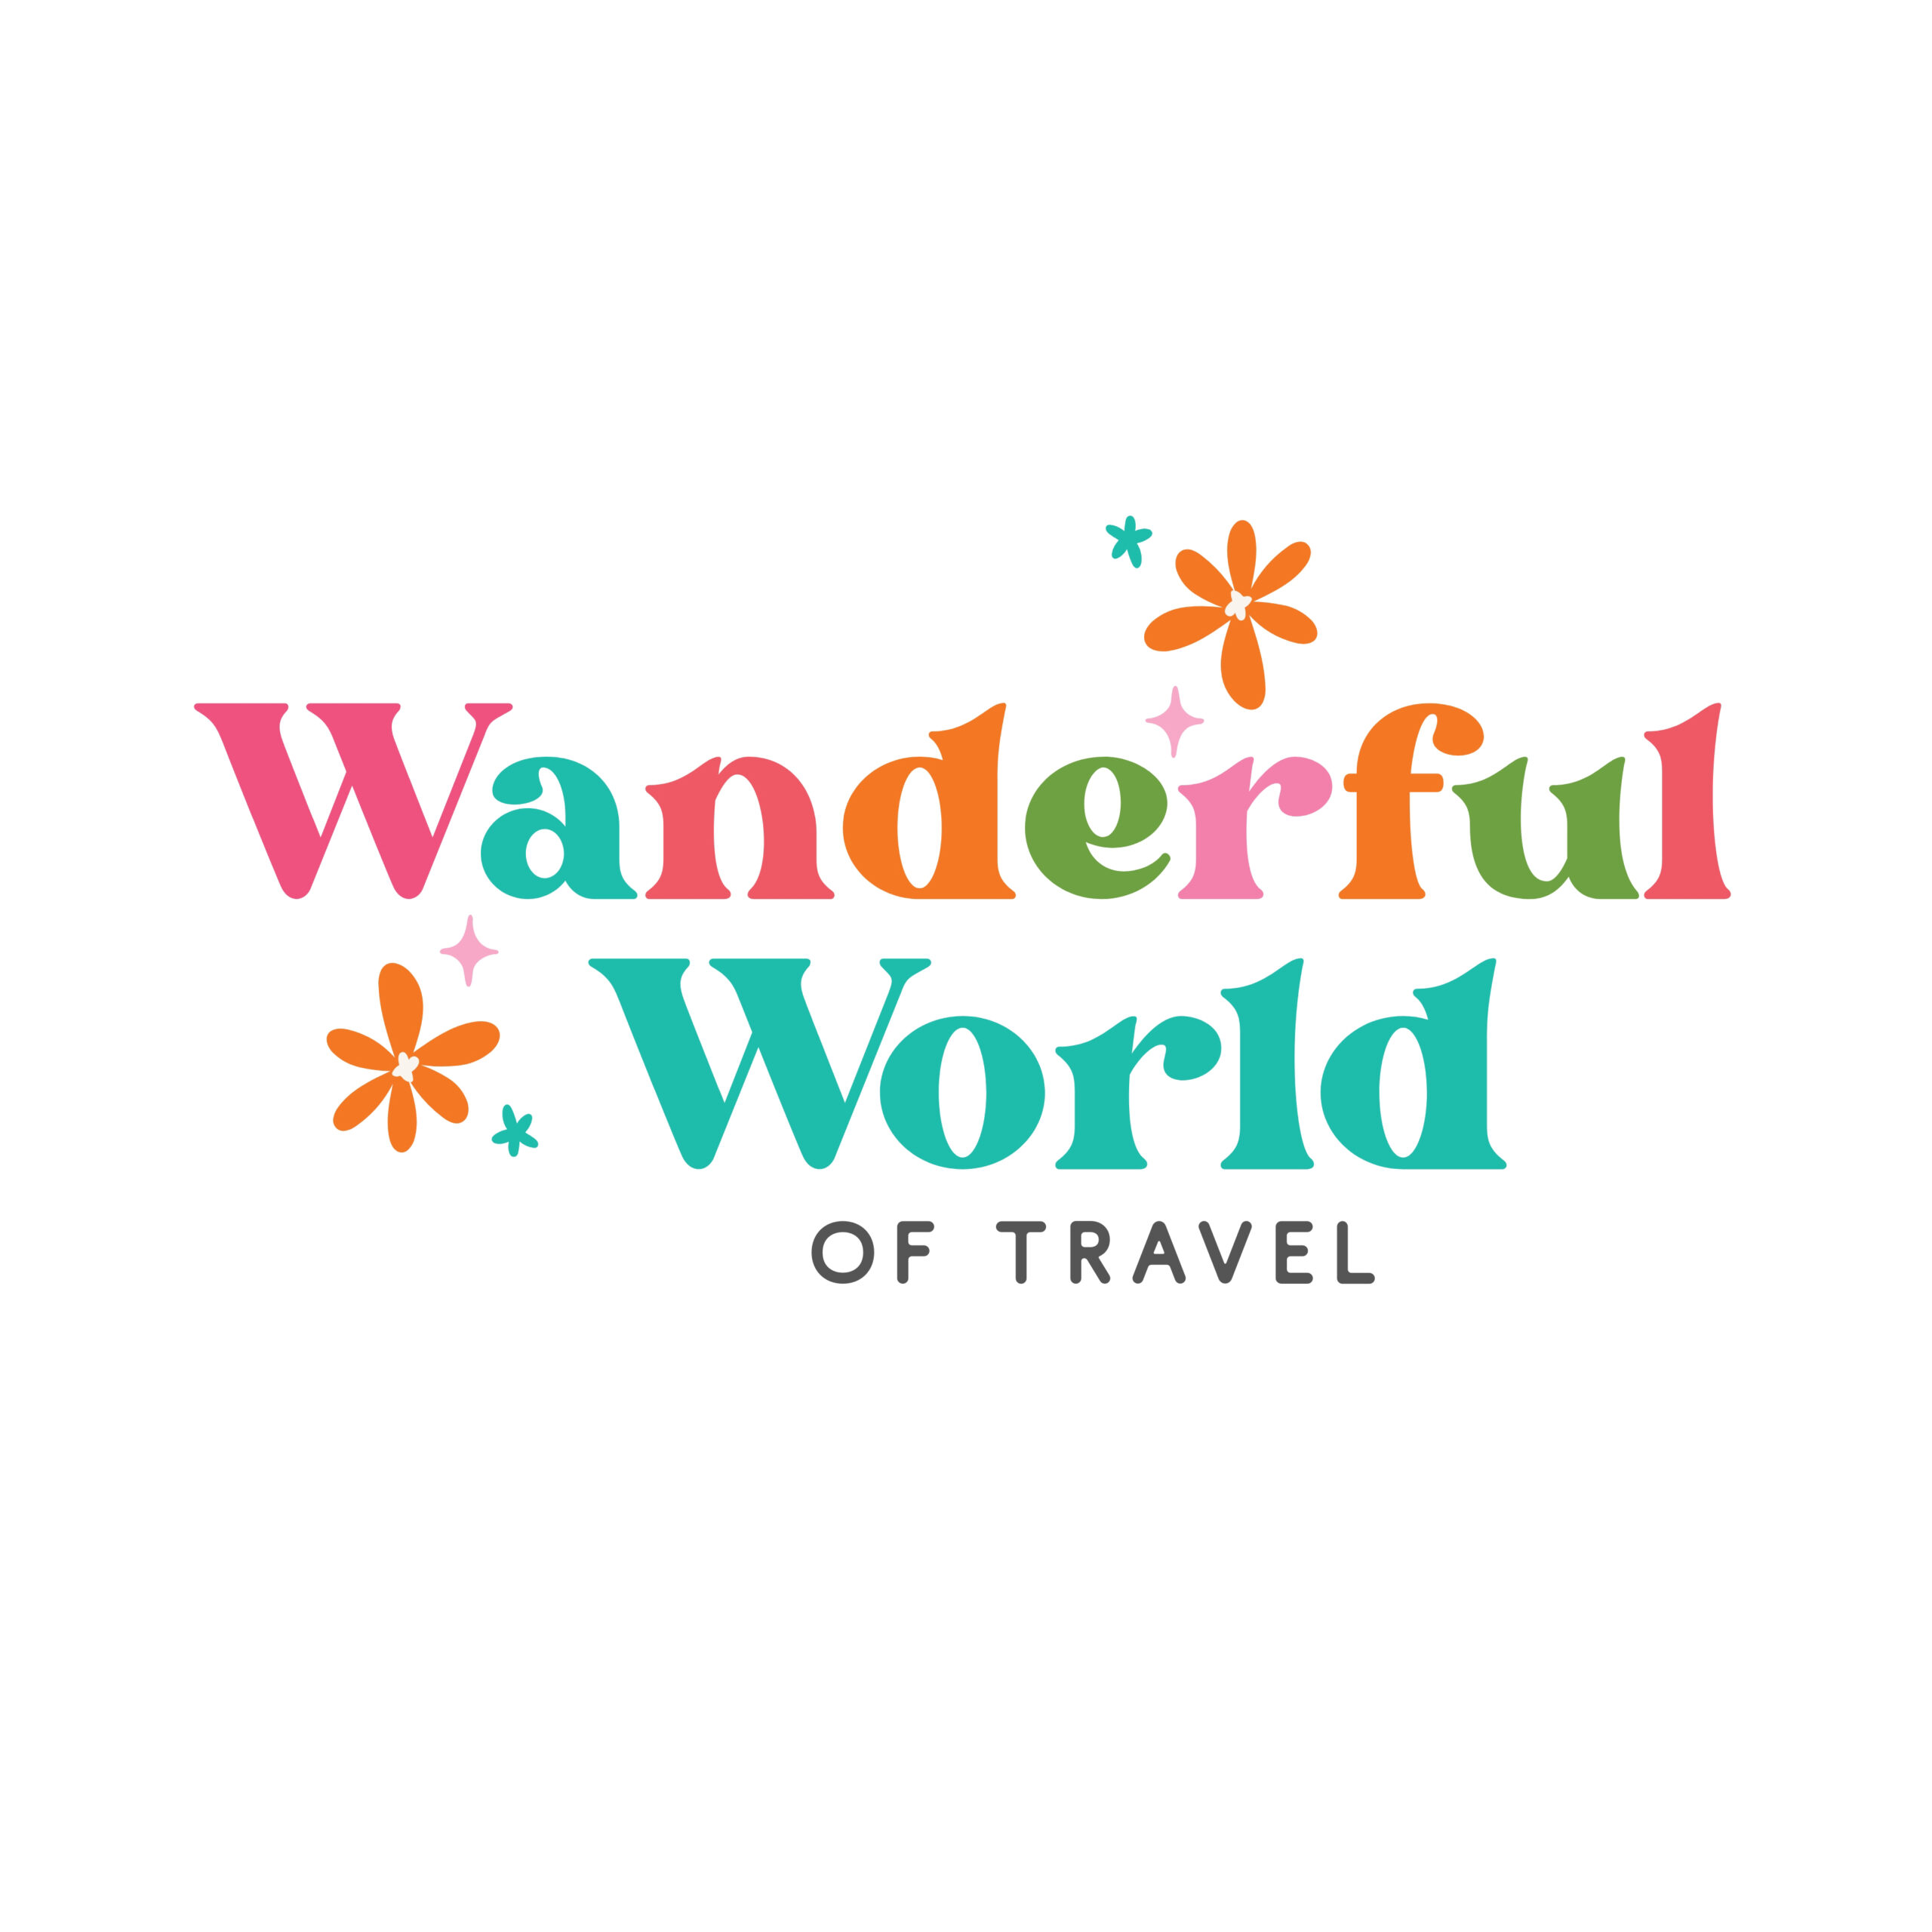 Wanderful World of Travel